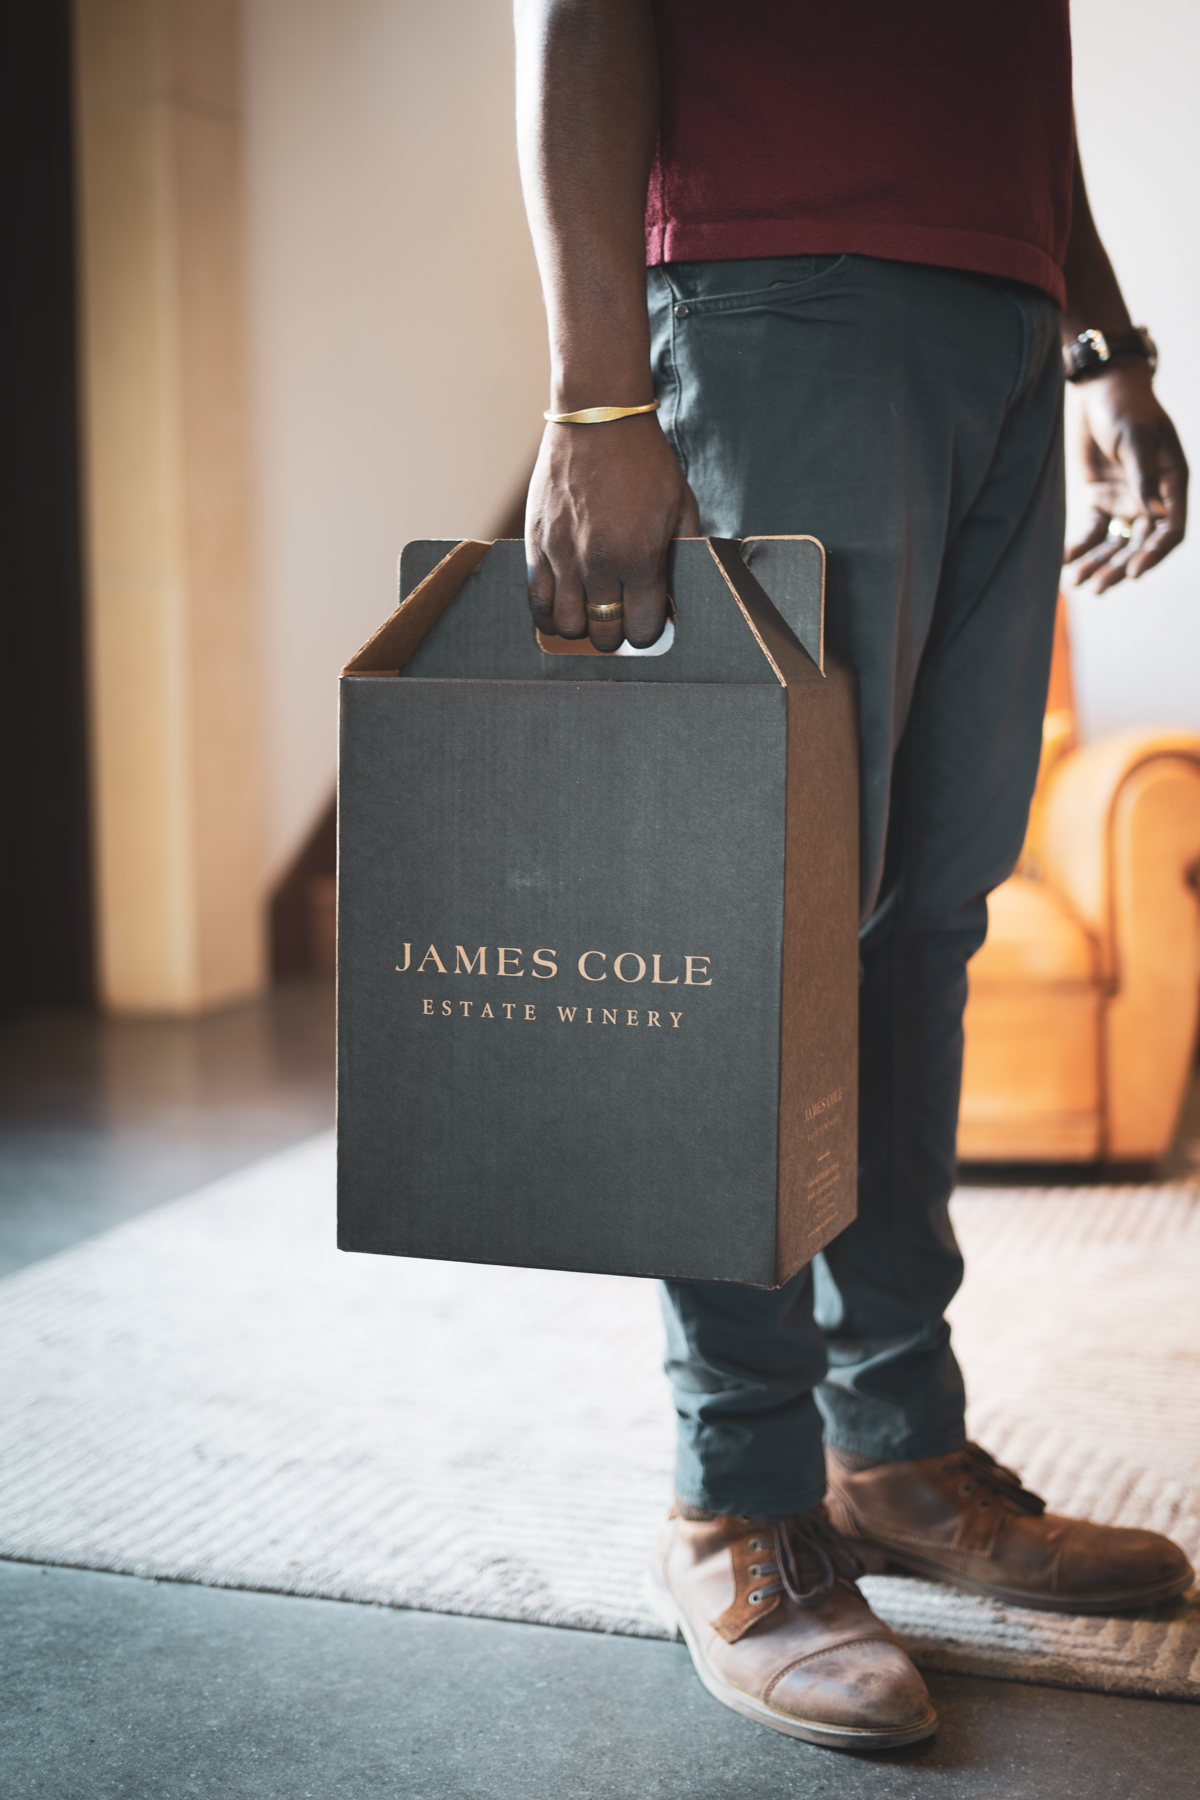 A person holding a James Cole wine box.